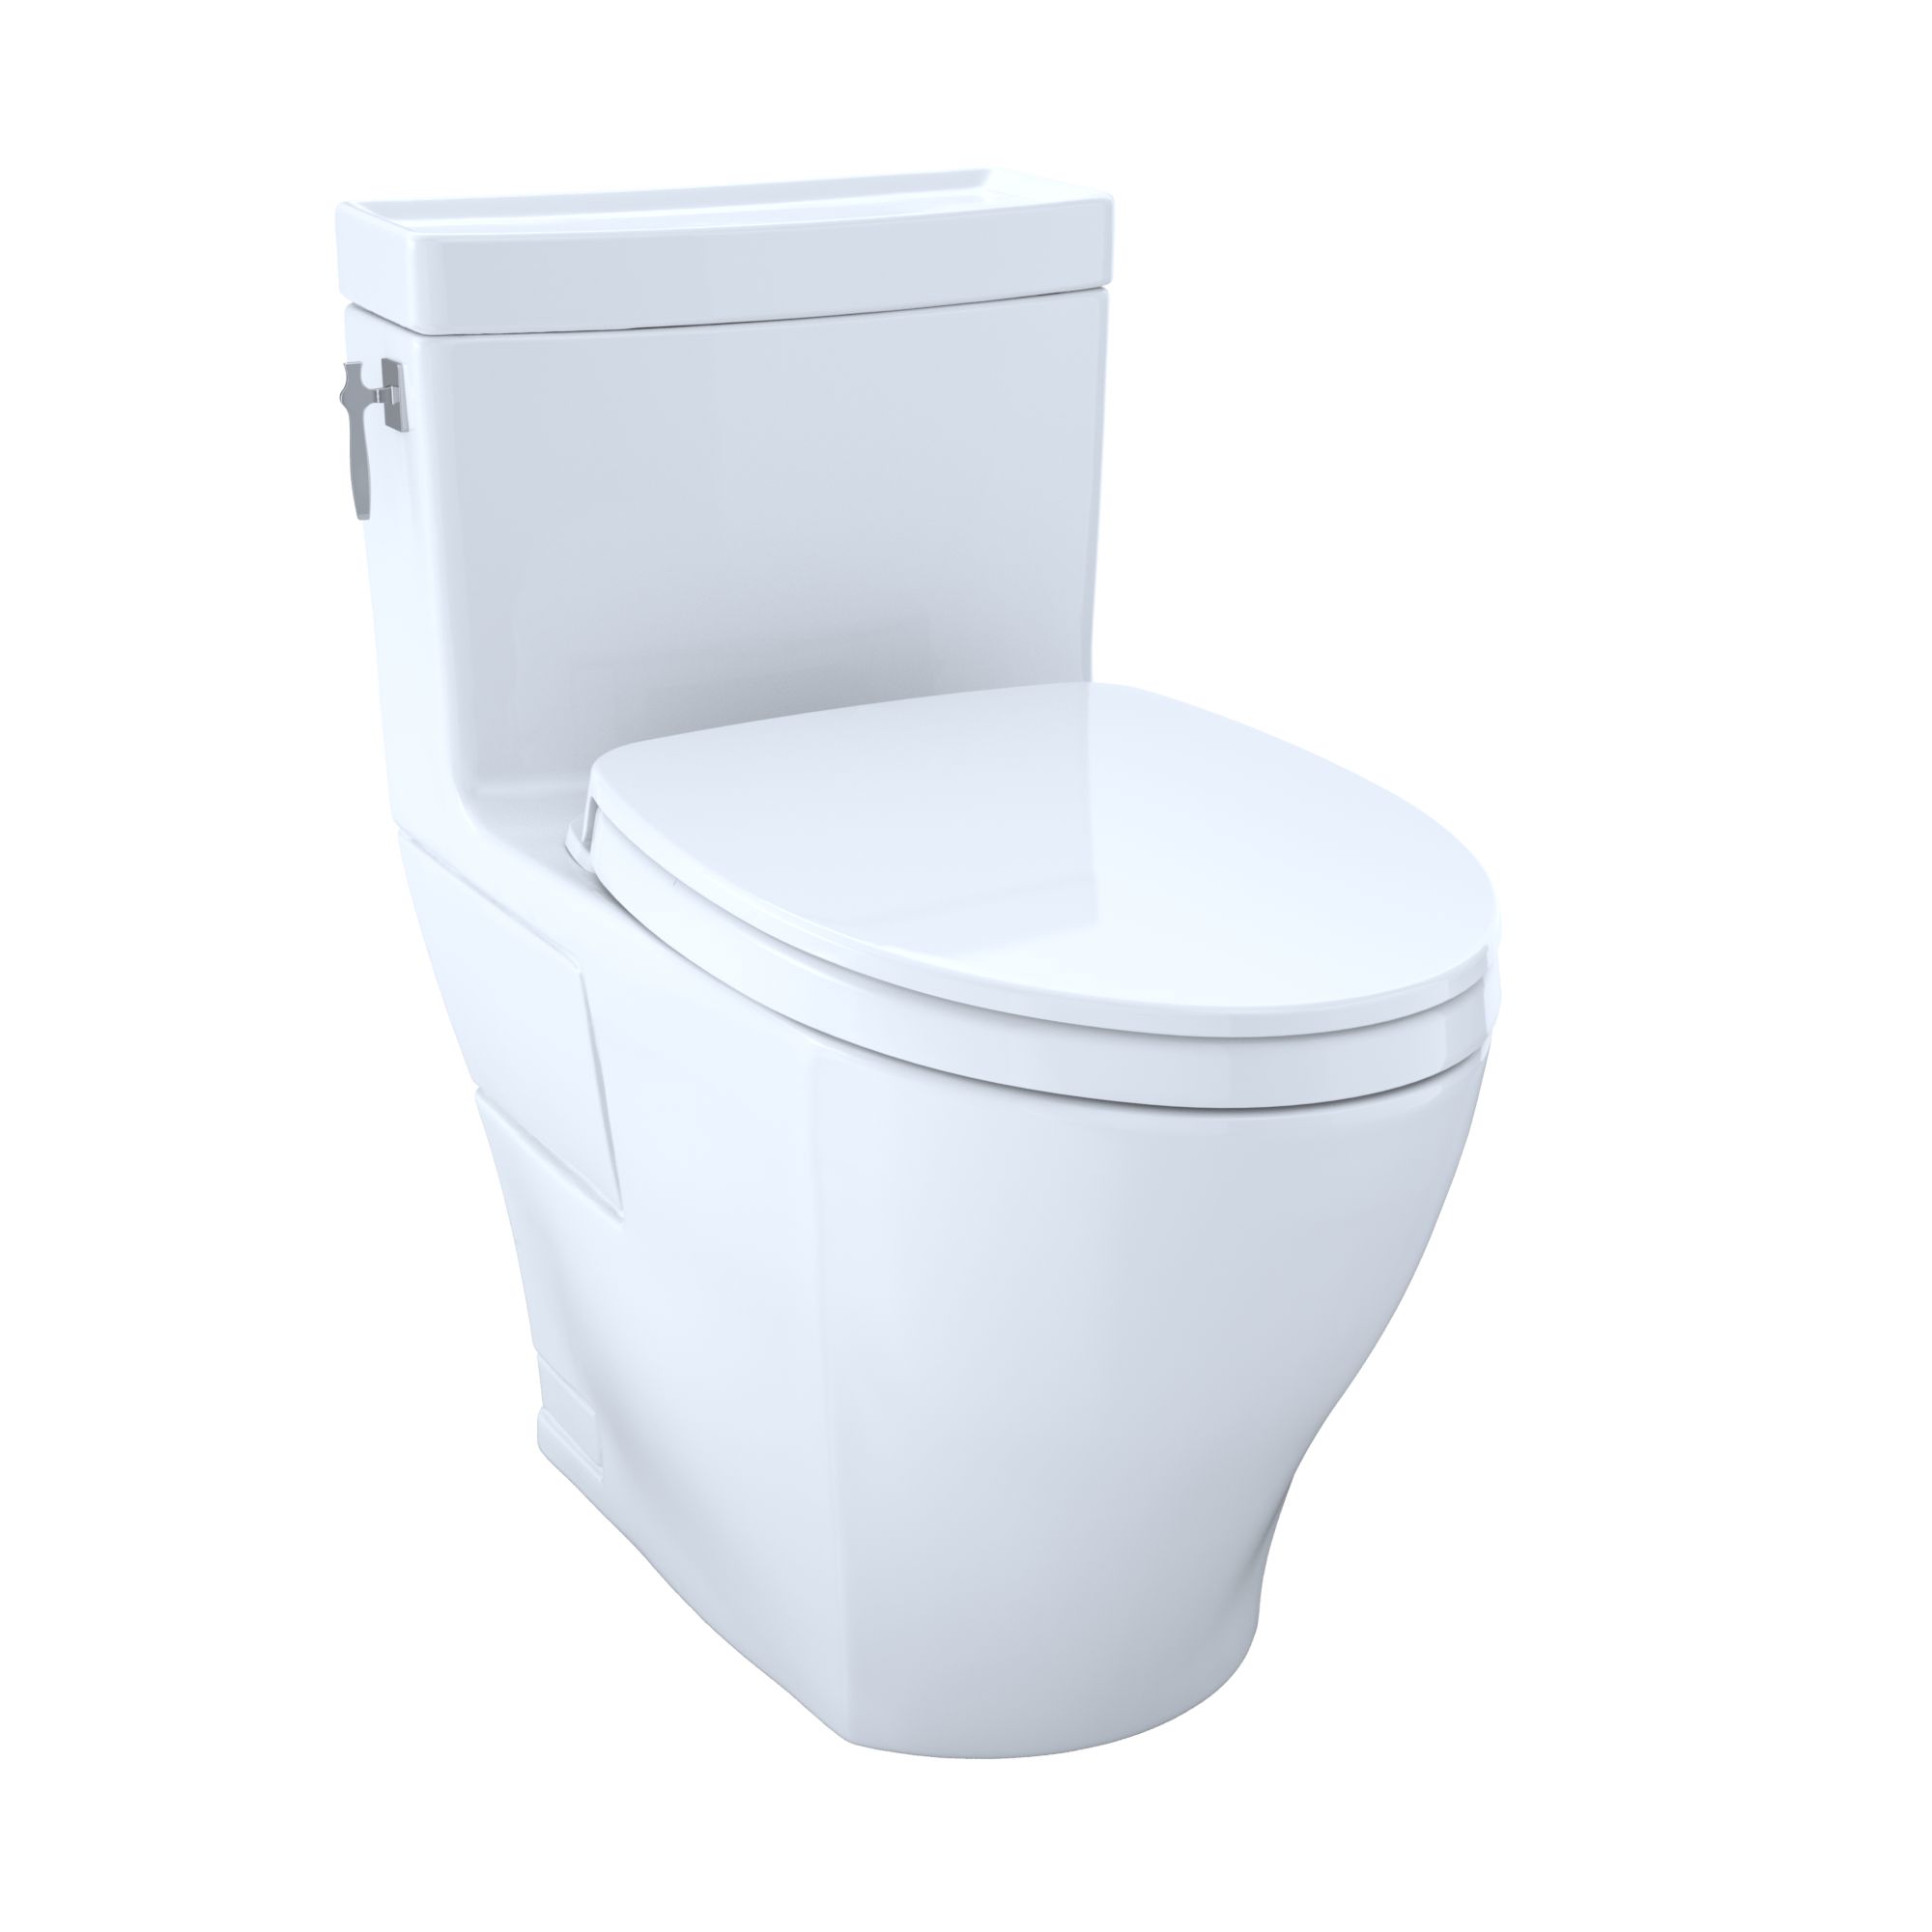 Toilet bowl W-888,Water closet 